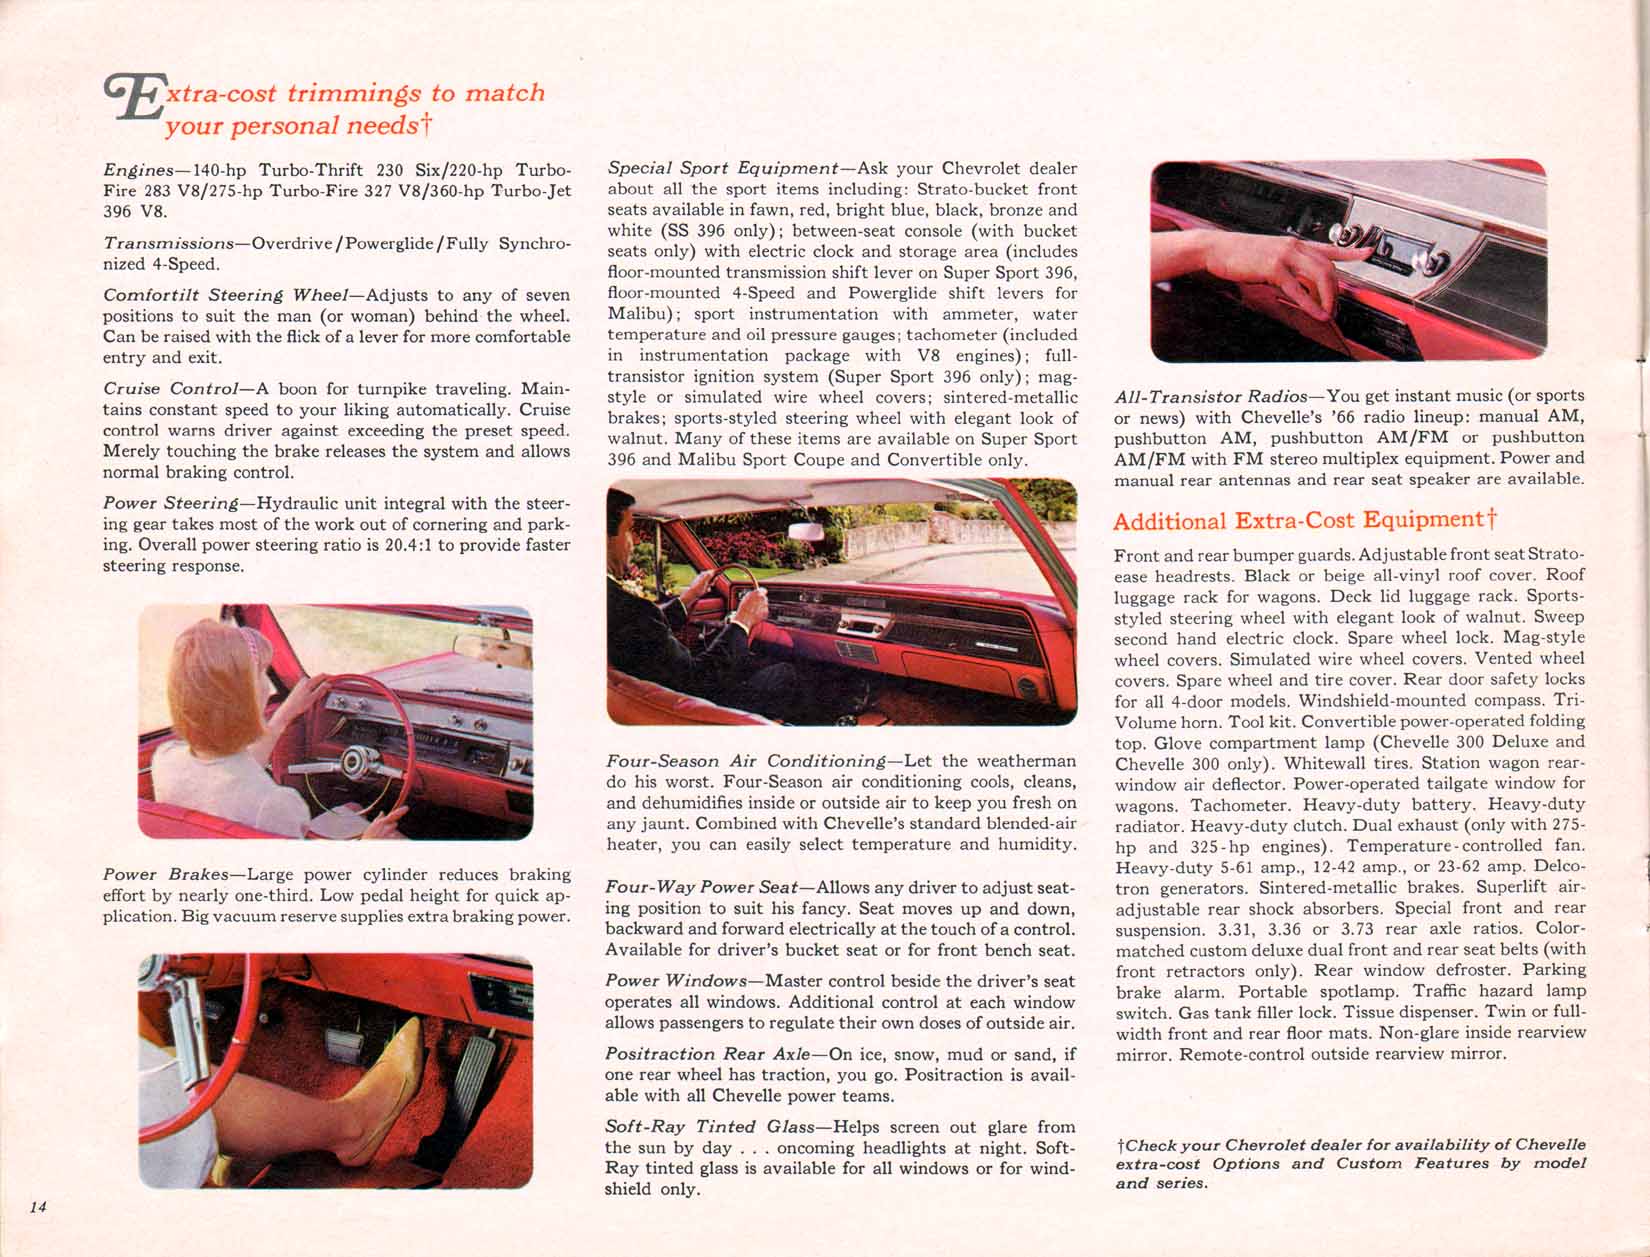 1966 Chev Chevelle Brochure Page 4